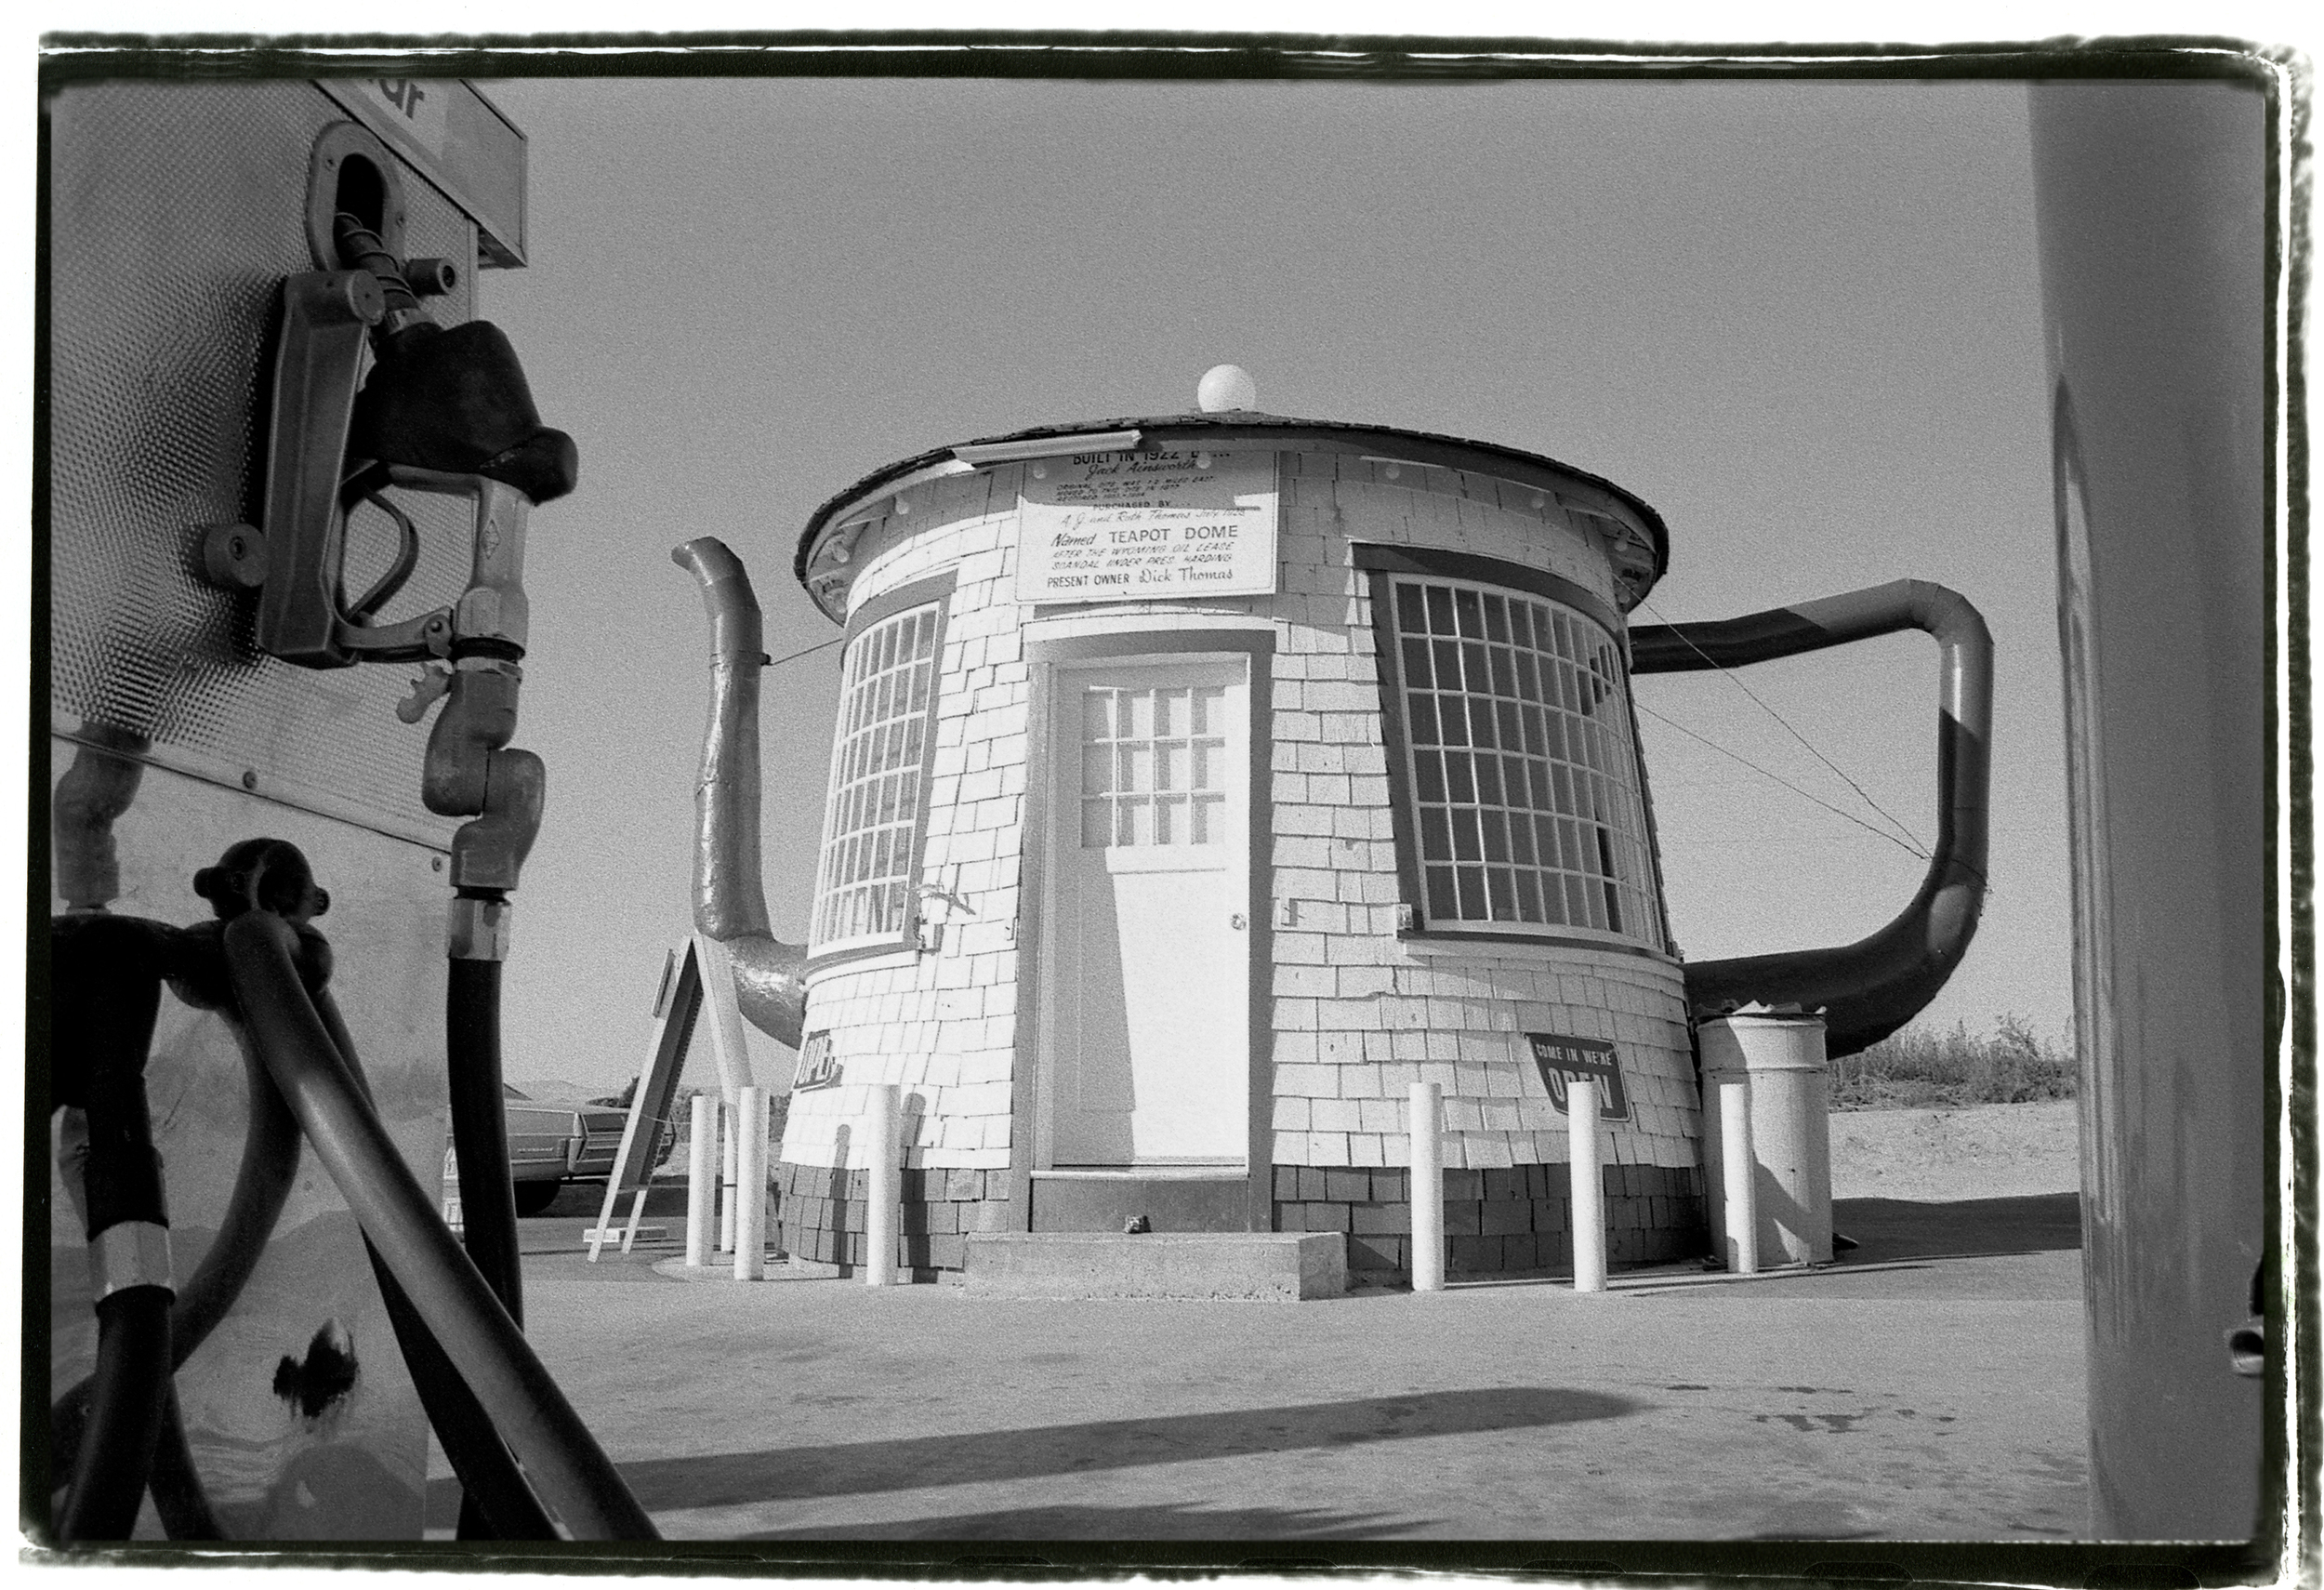 Teapot Dome Service Station, Zillah, Washington, 1985. ©Kelly Povo